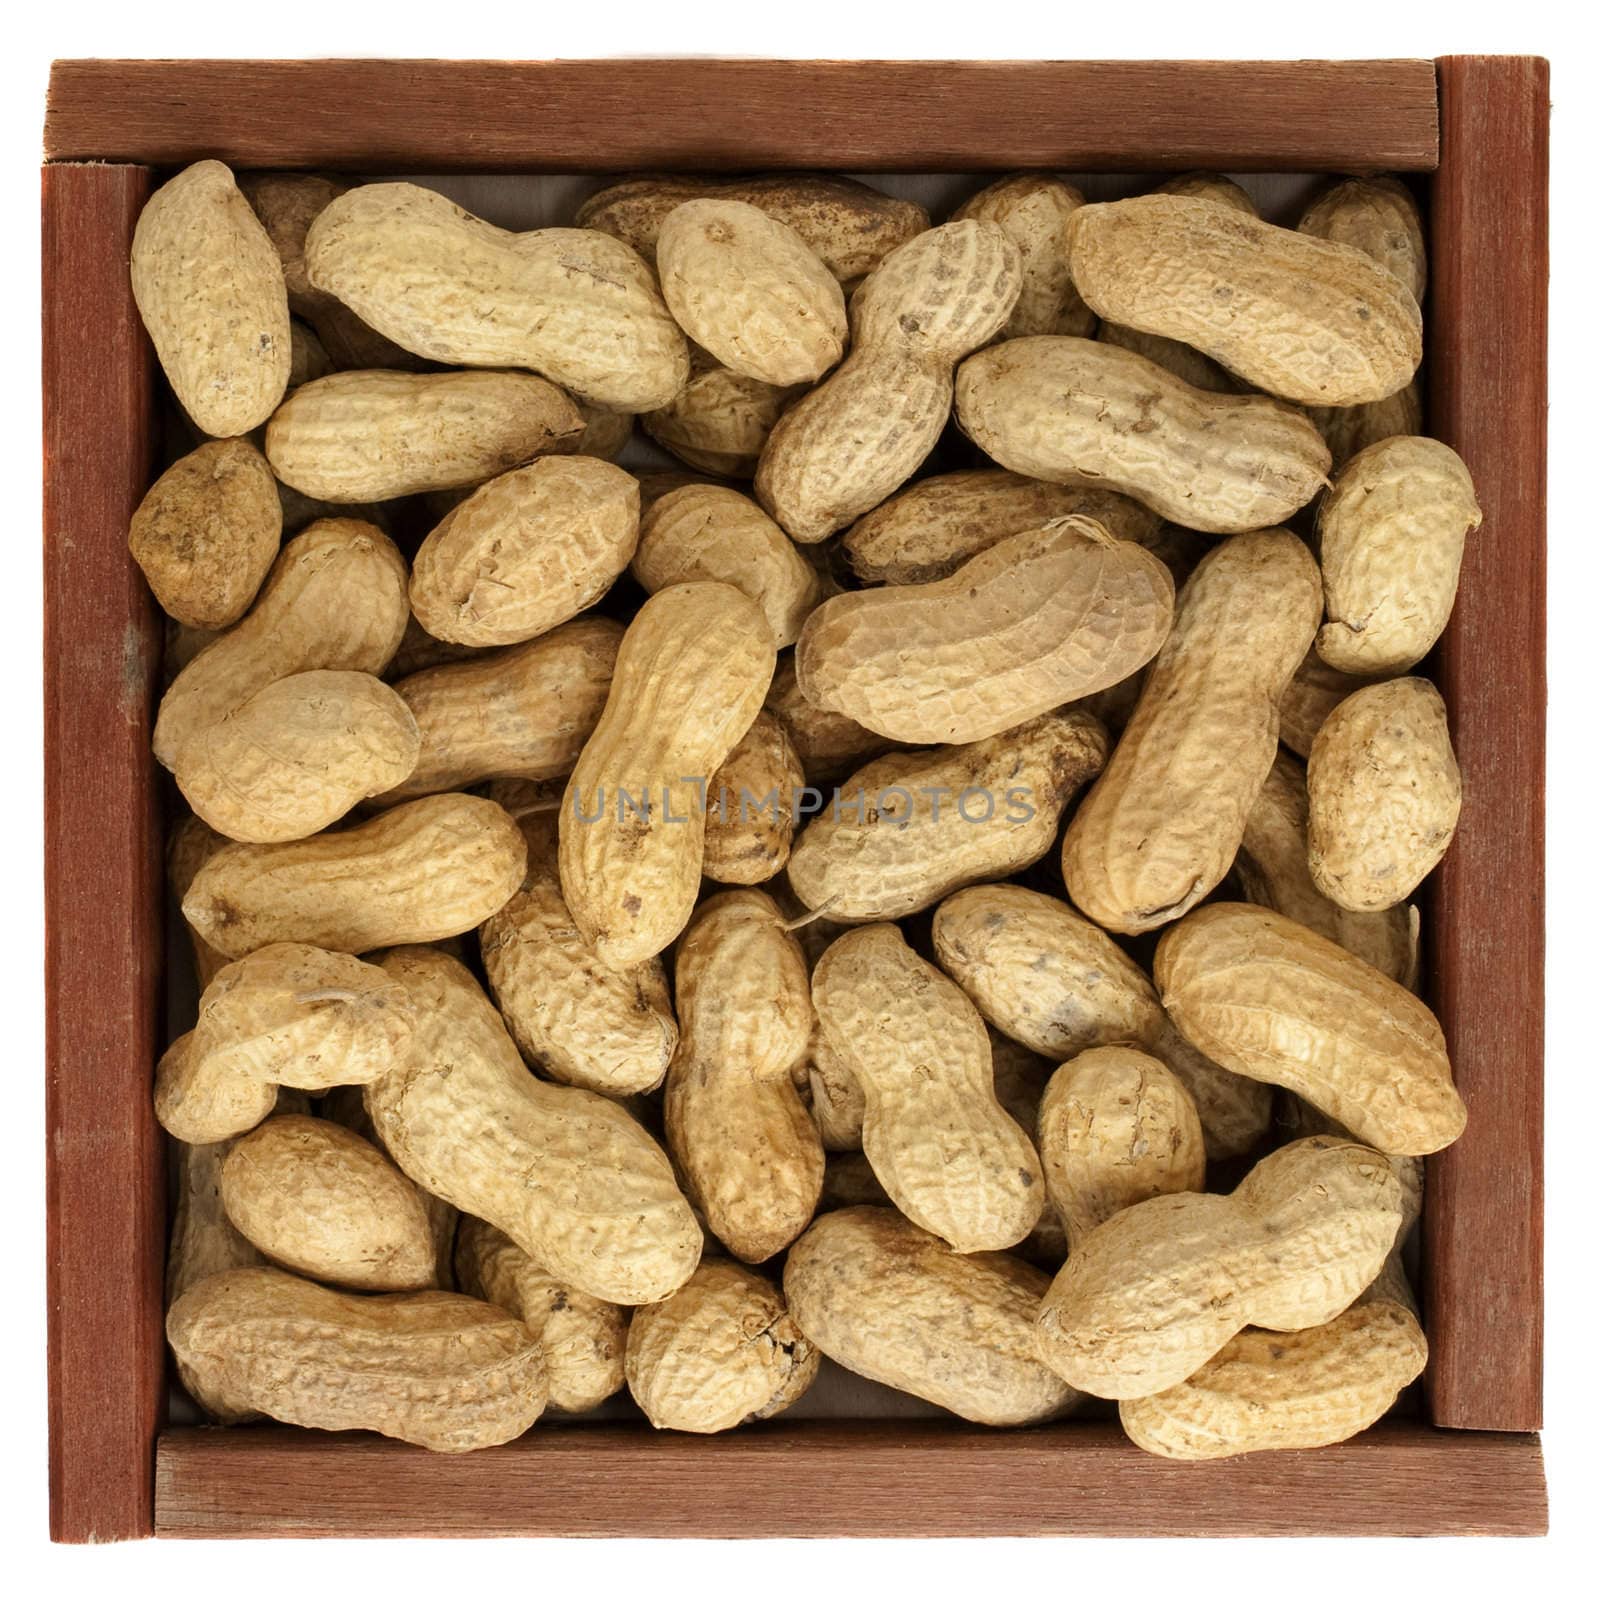 peanuts in a rustic, wooden box by PixelsAway